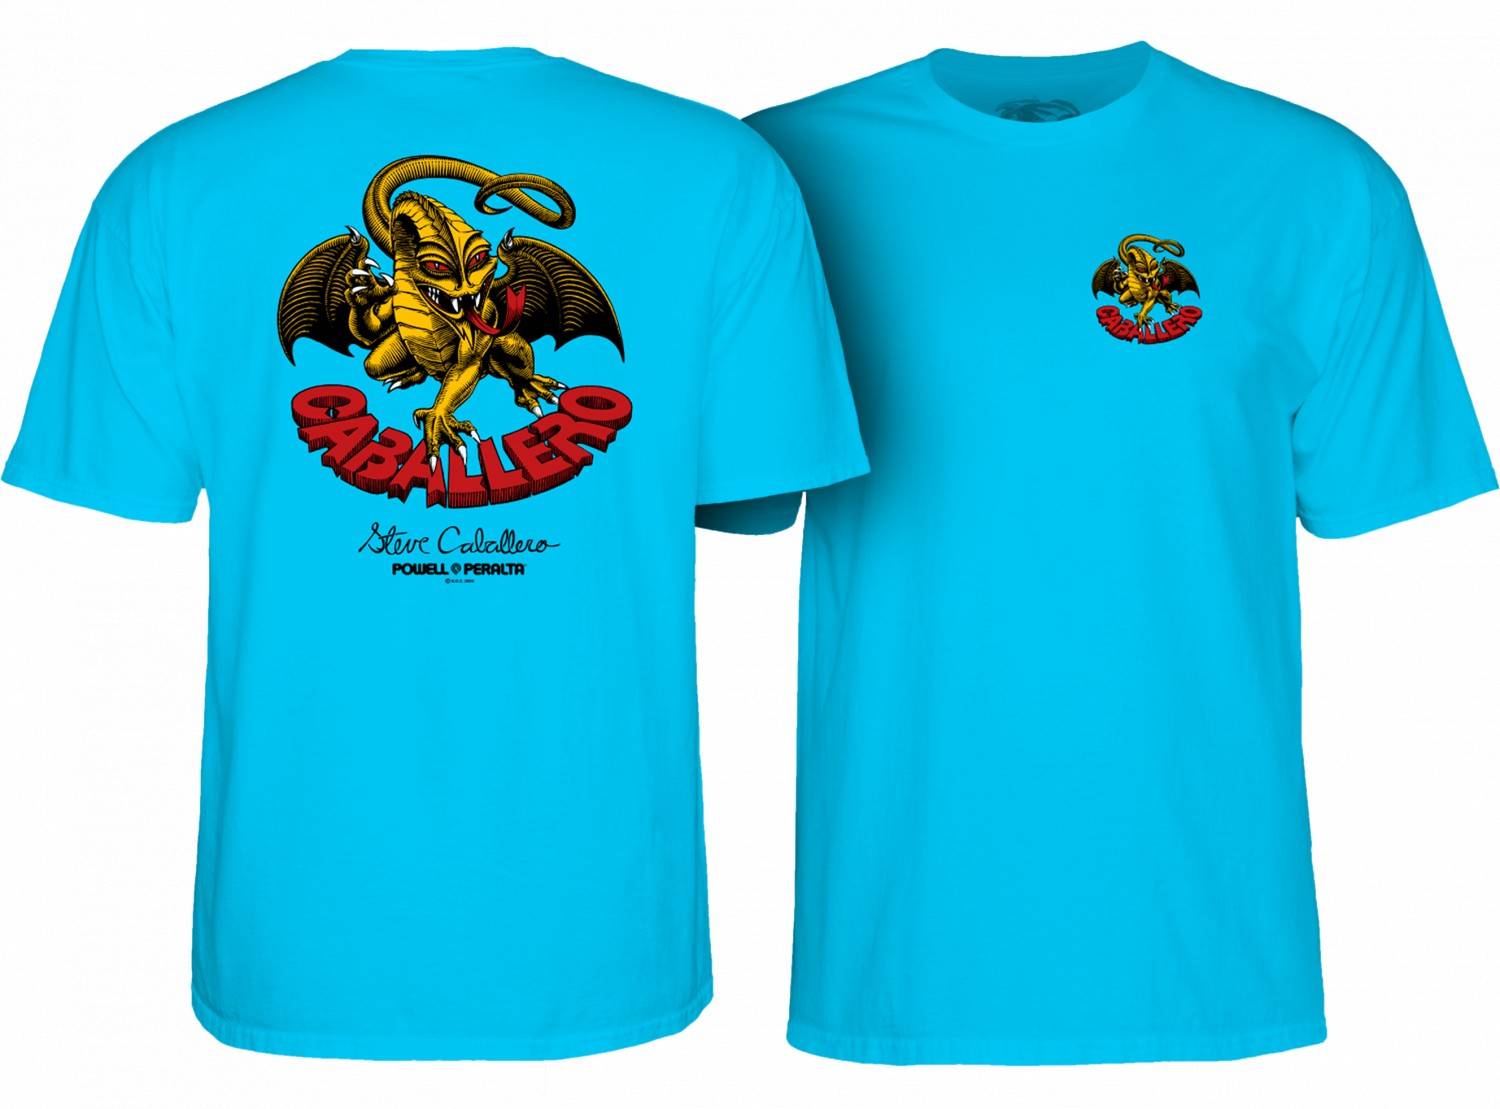 Powell Peralta Cab Dragon II T-shirt Turquoise - SkateTillDeath.com